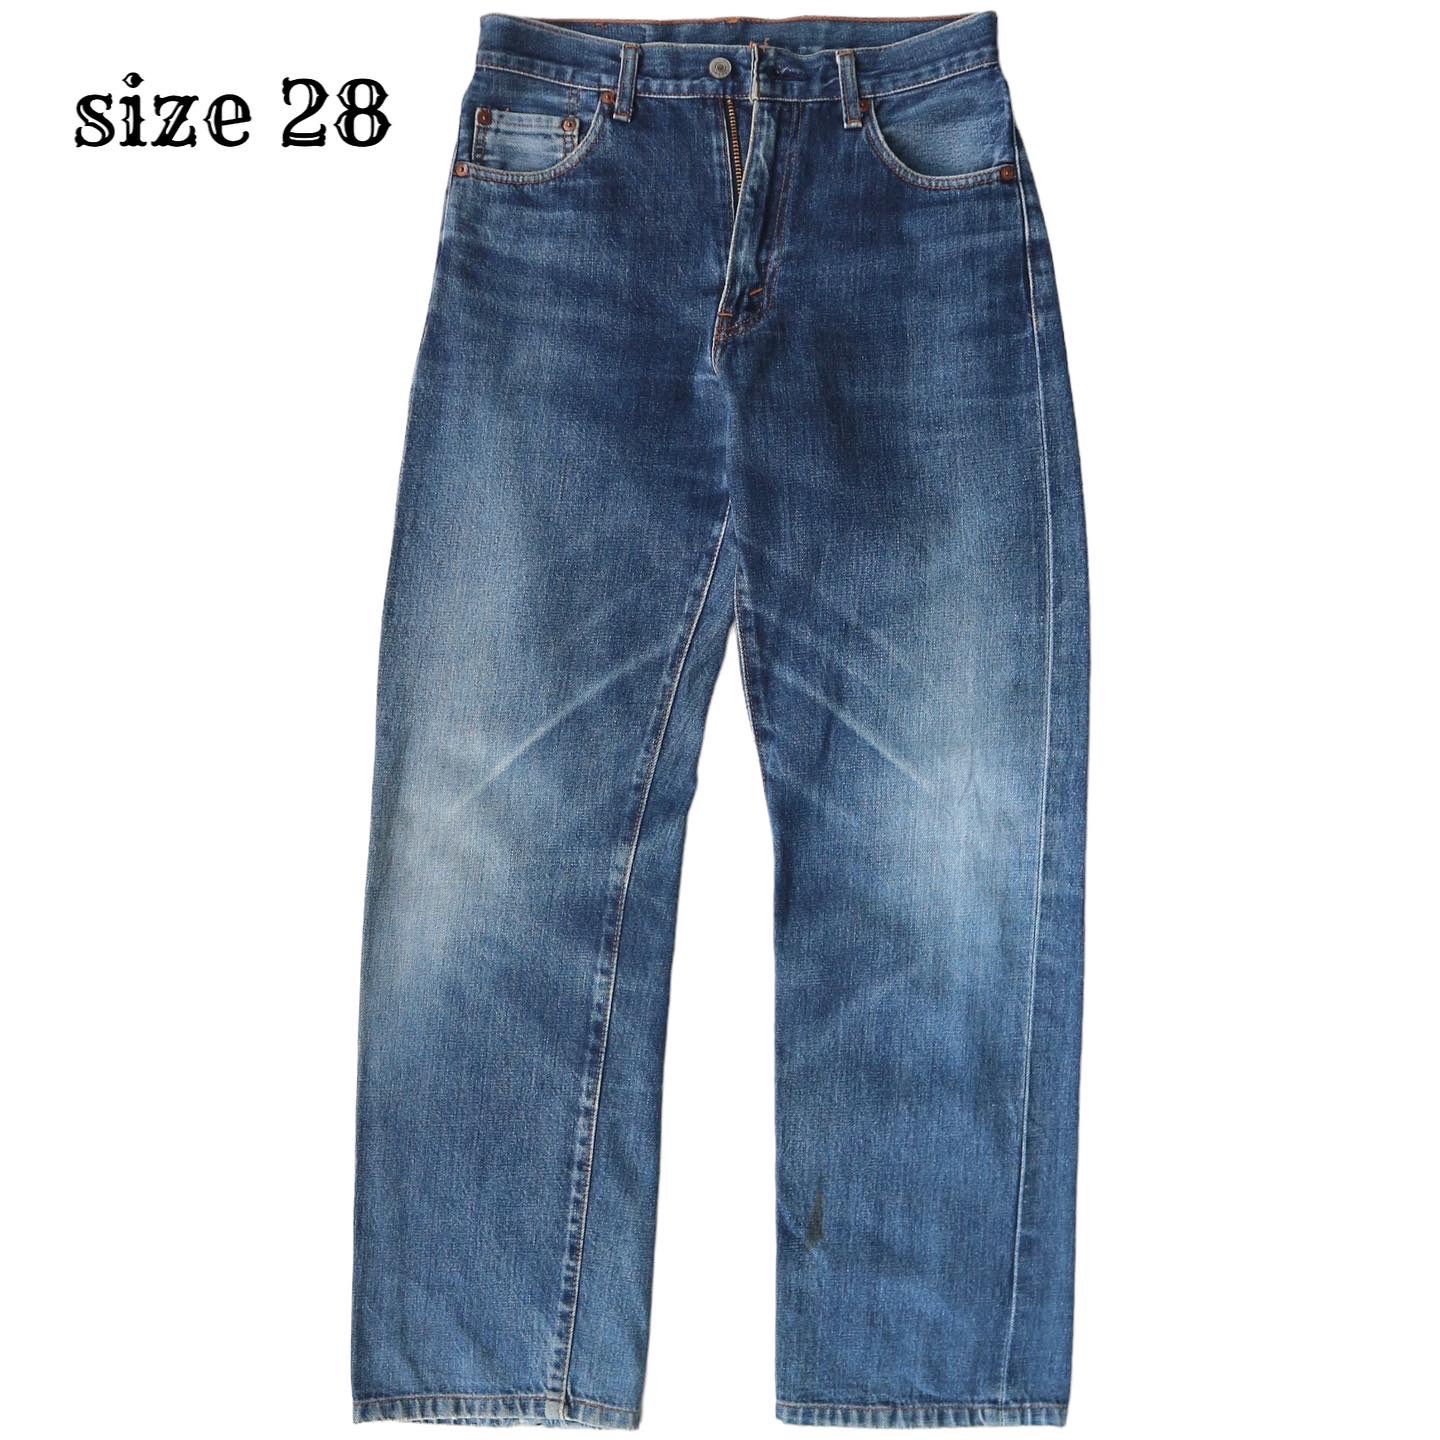 90s LEVI'S 502 Selvedge Denim Jeans Size 28 denimister